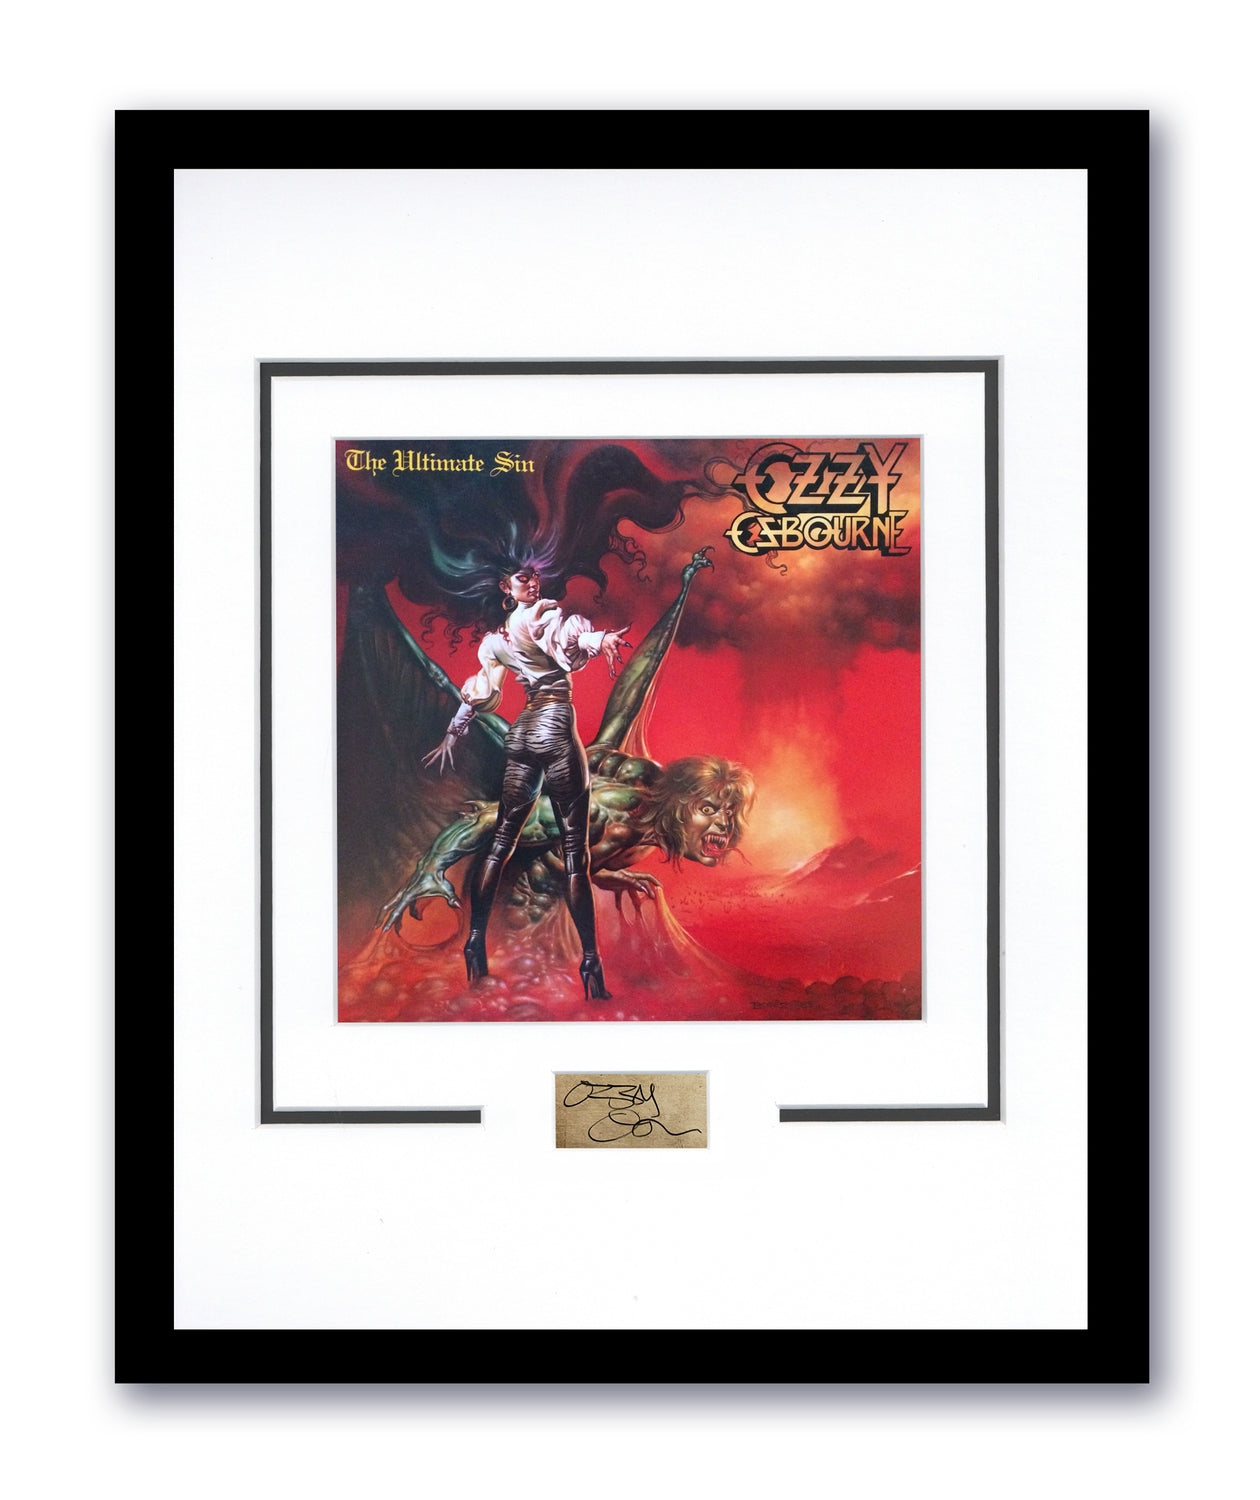 Ozzy Osbourne Autographed Signed 11x14 Framed Photo Bark At The Moon ACOA